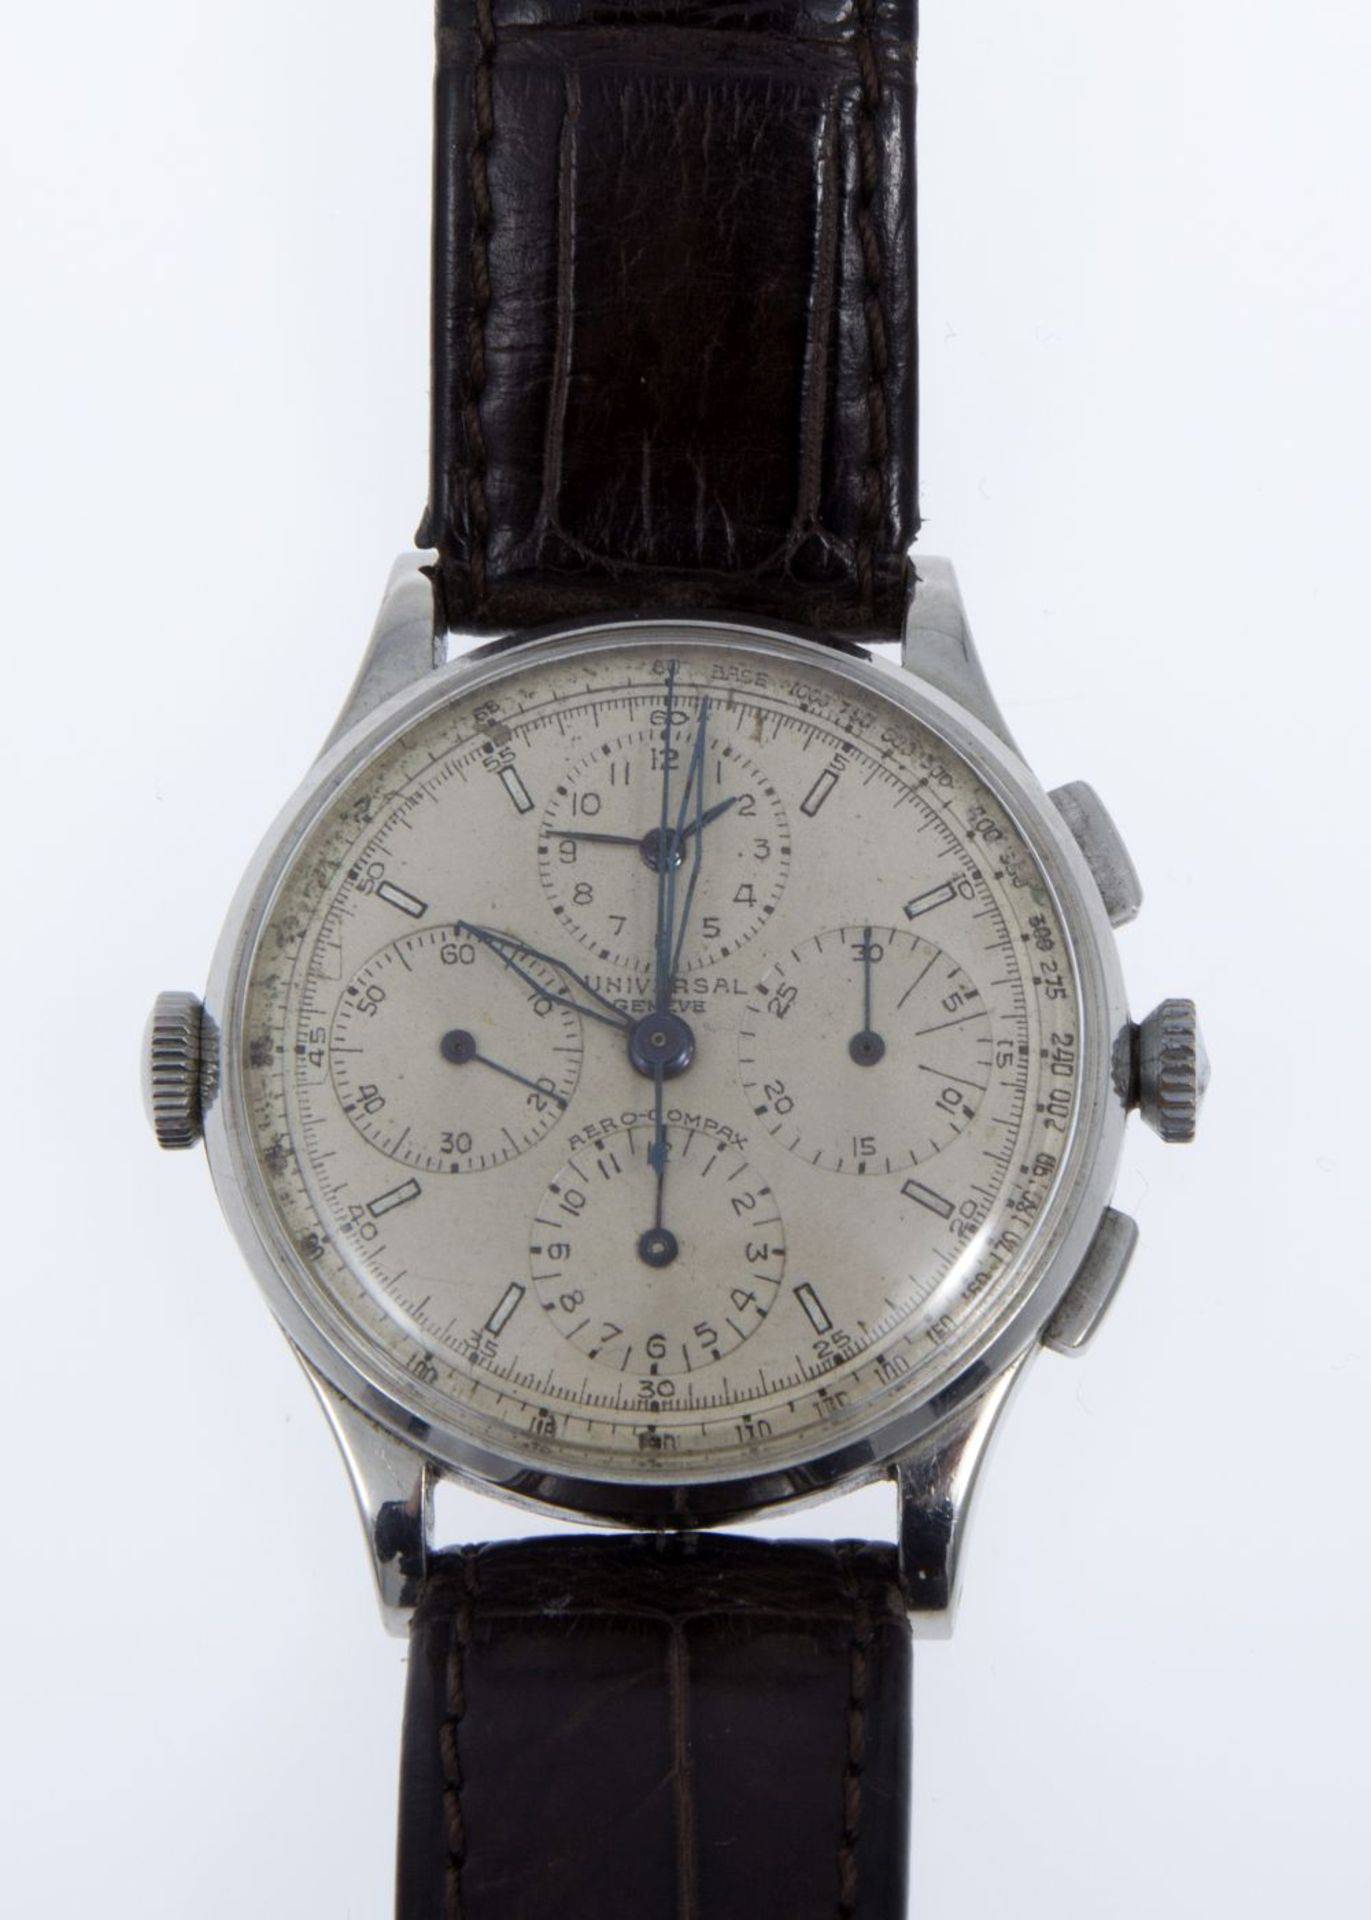 Universal Genève-Armbanduhr "Aero Compax" mit ChronographGehäuse aus Stahl. Versilbertes Zifferblatt - Bild 2 aus 3